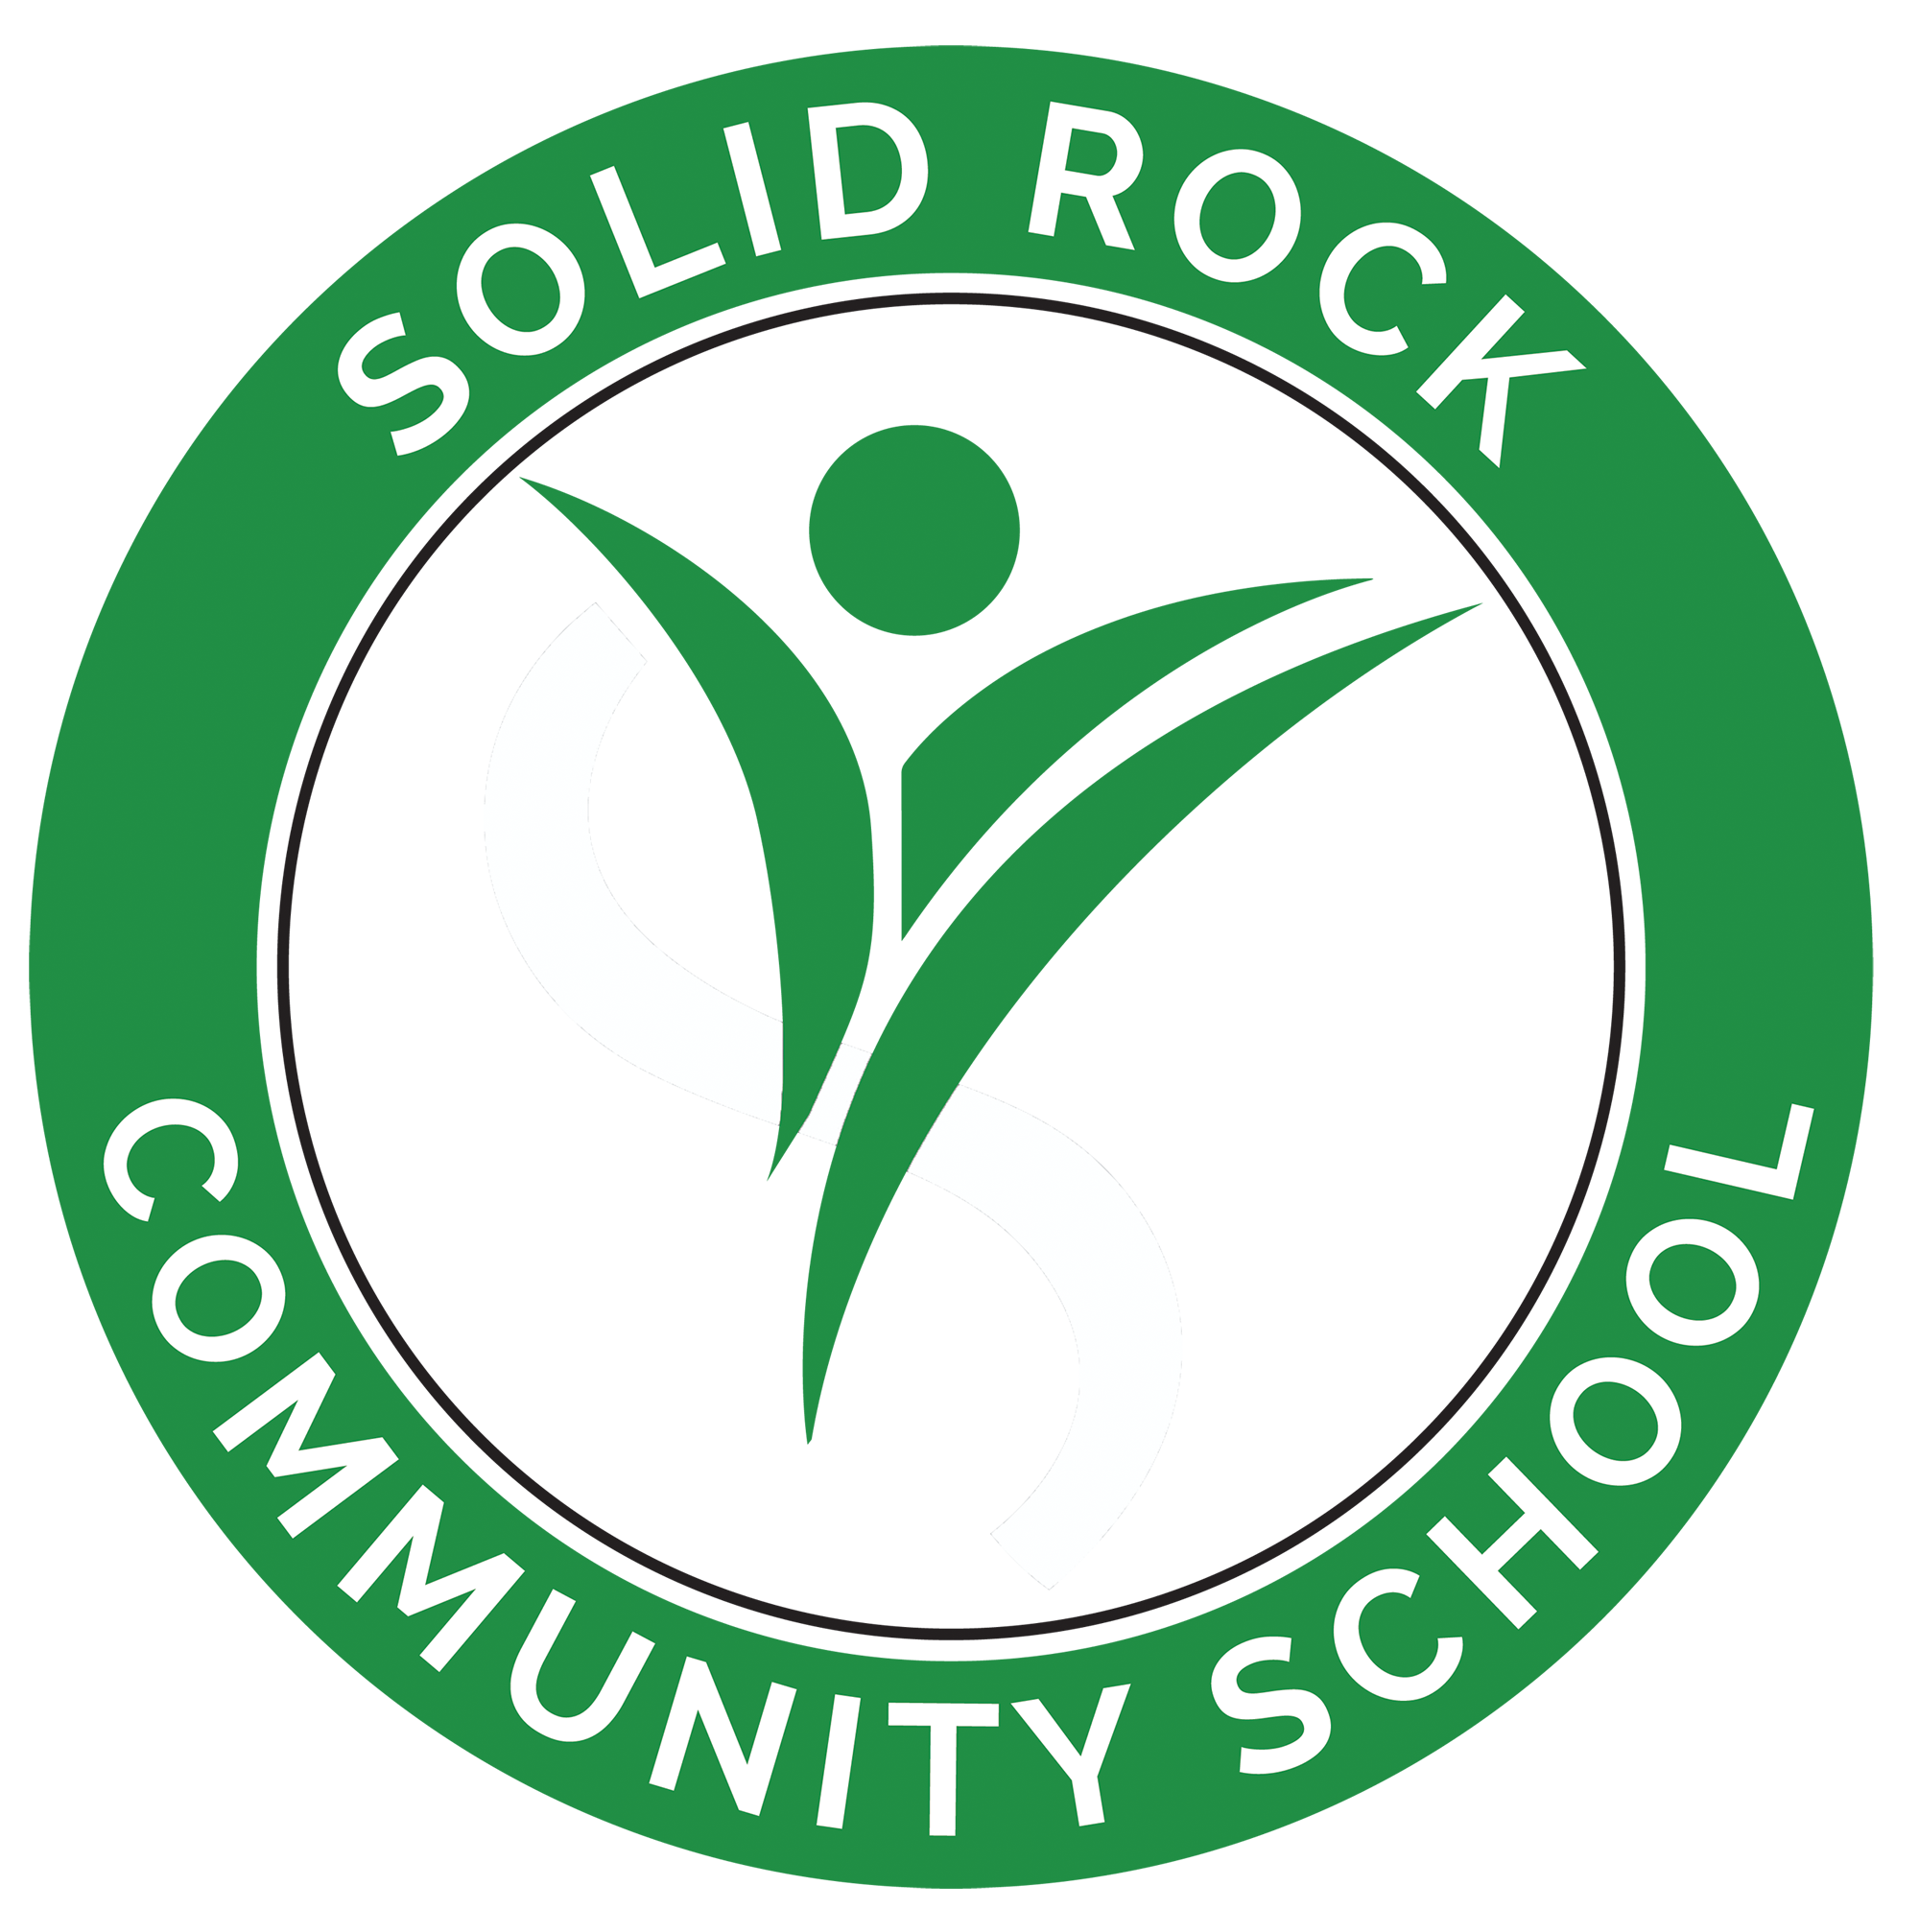 Visit Solid Rock Community School